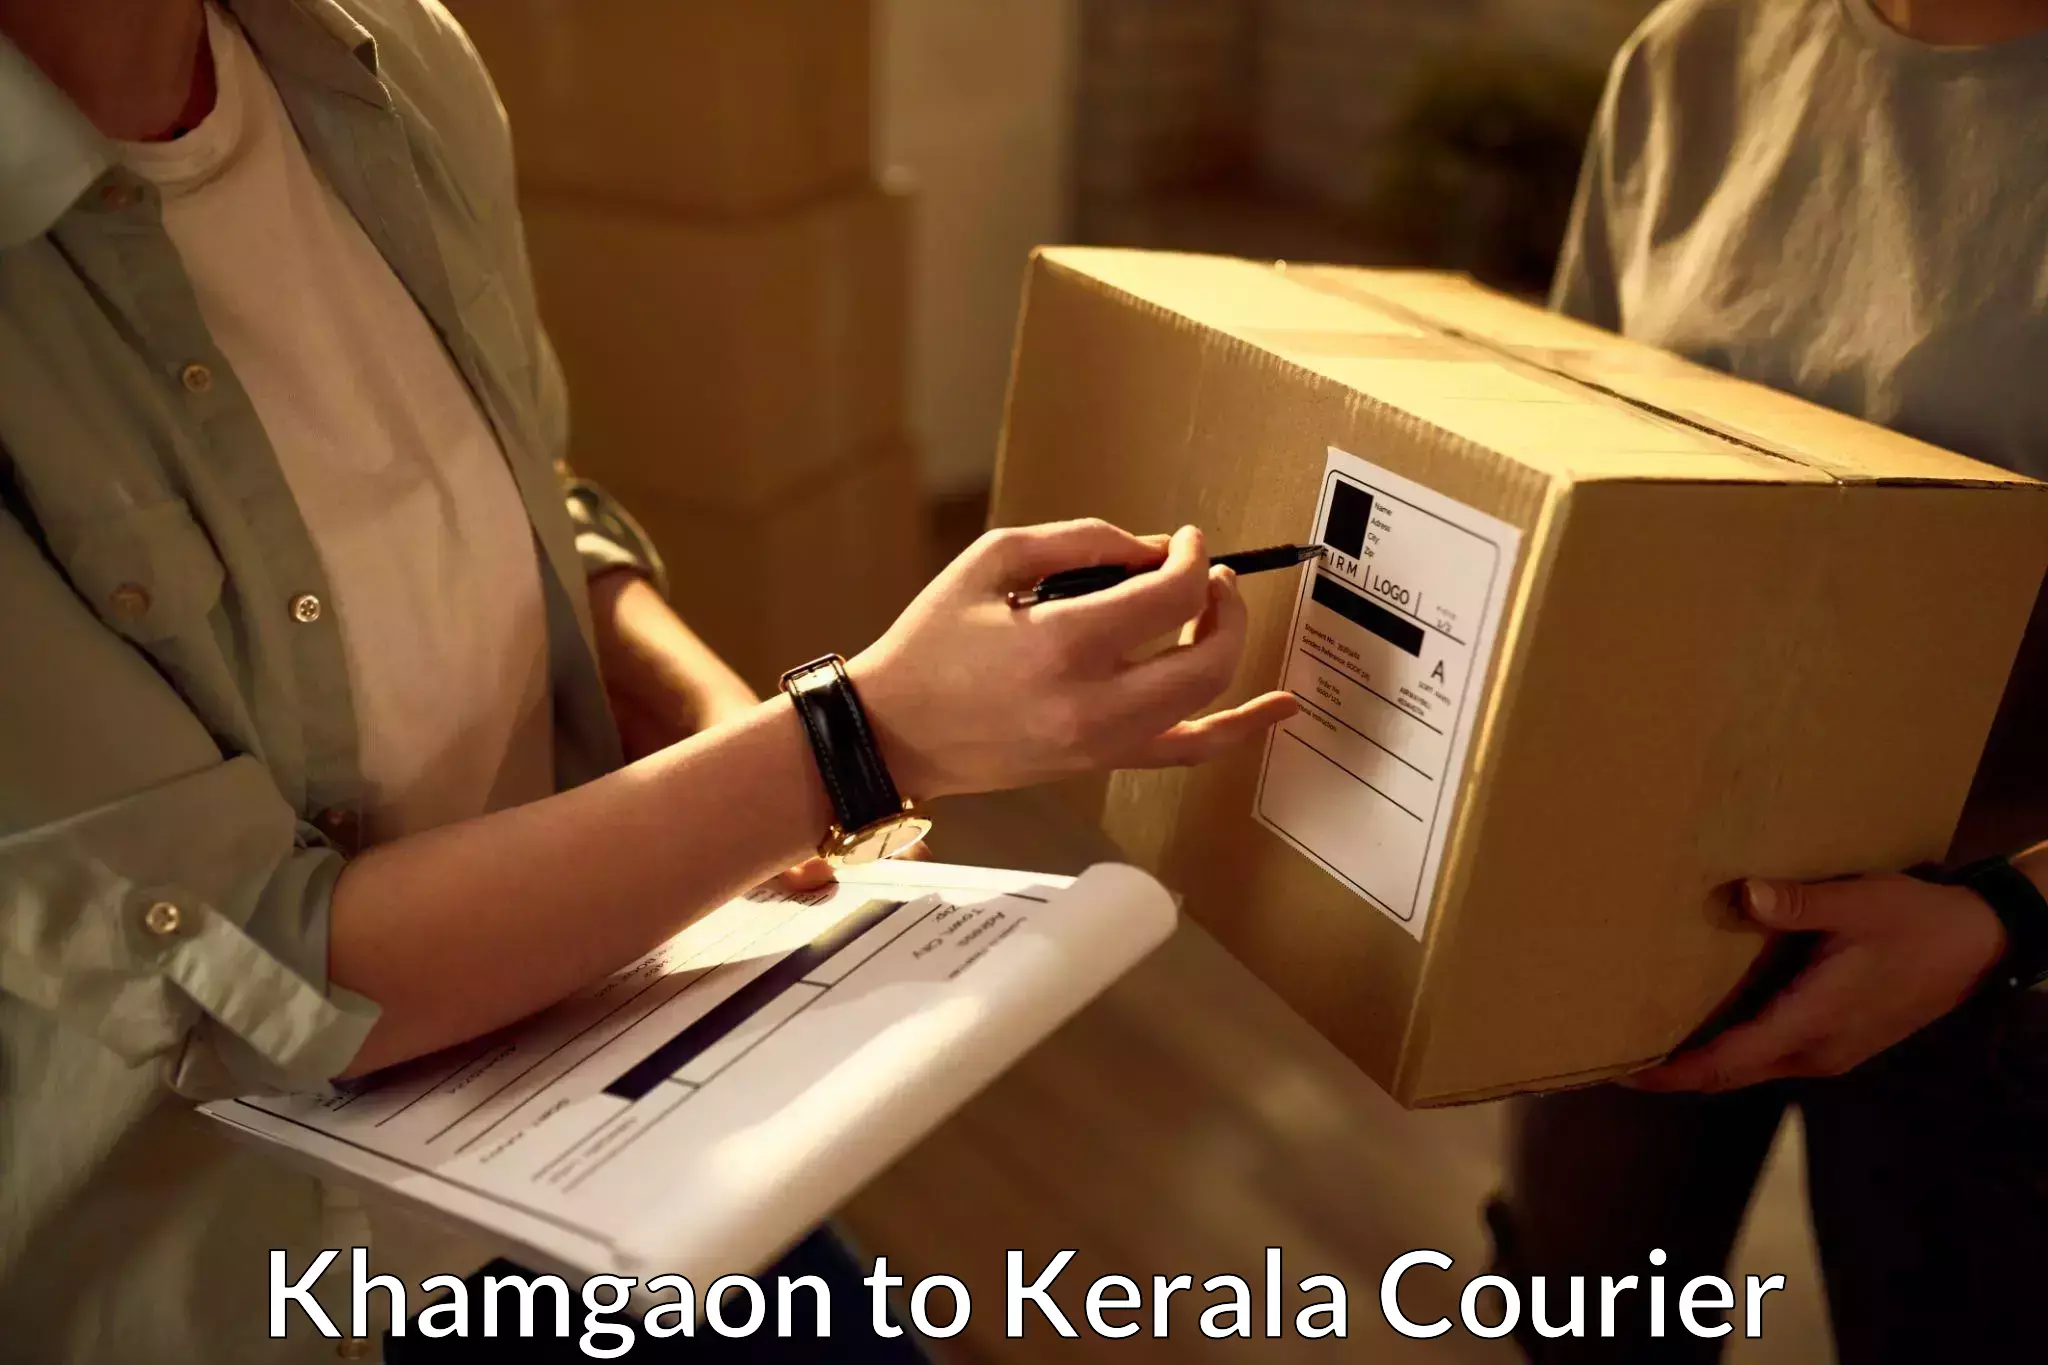 Global logistics network Khamgaon to Kerala